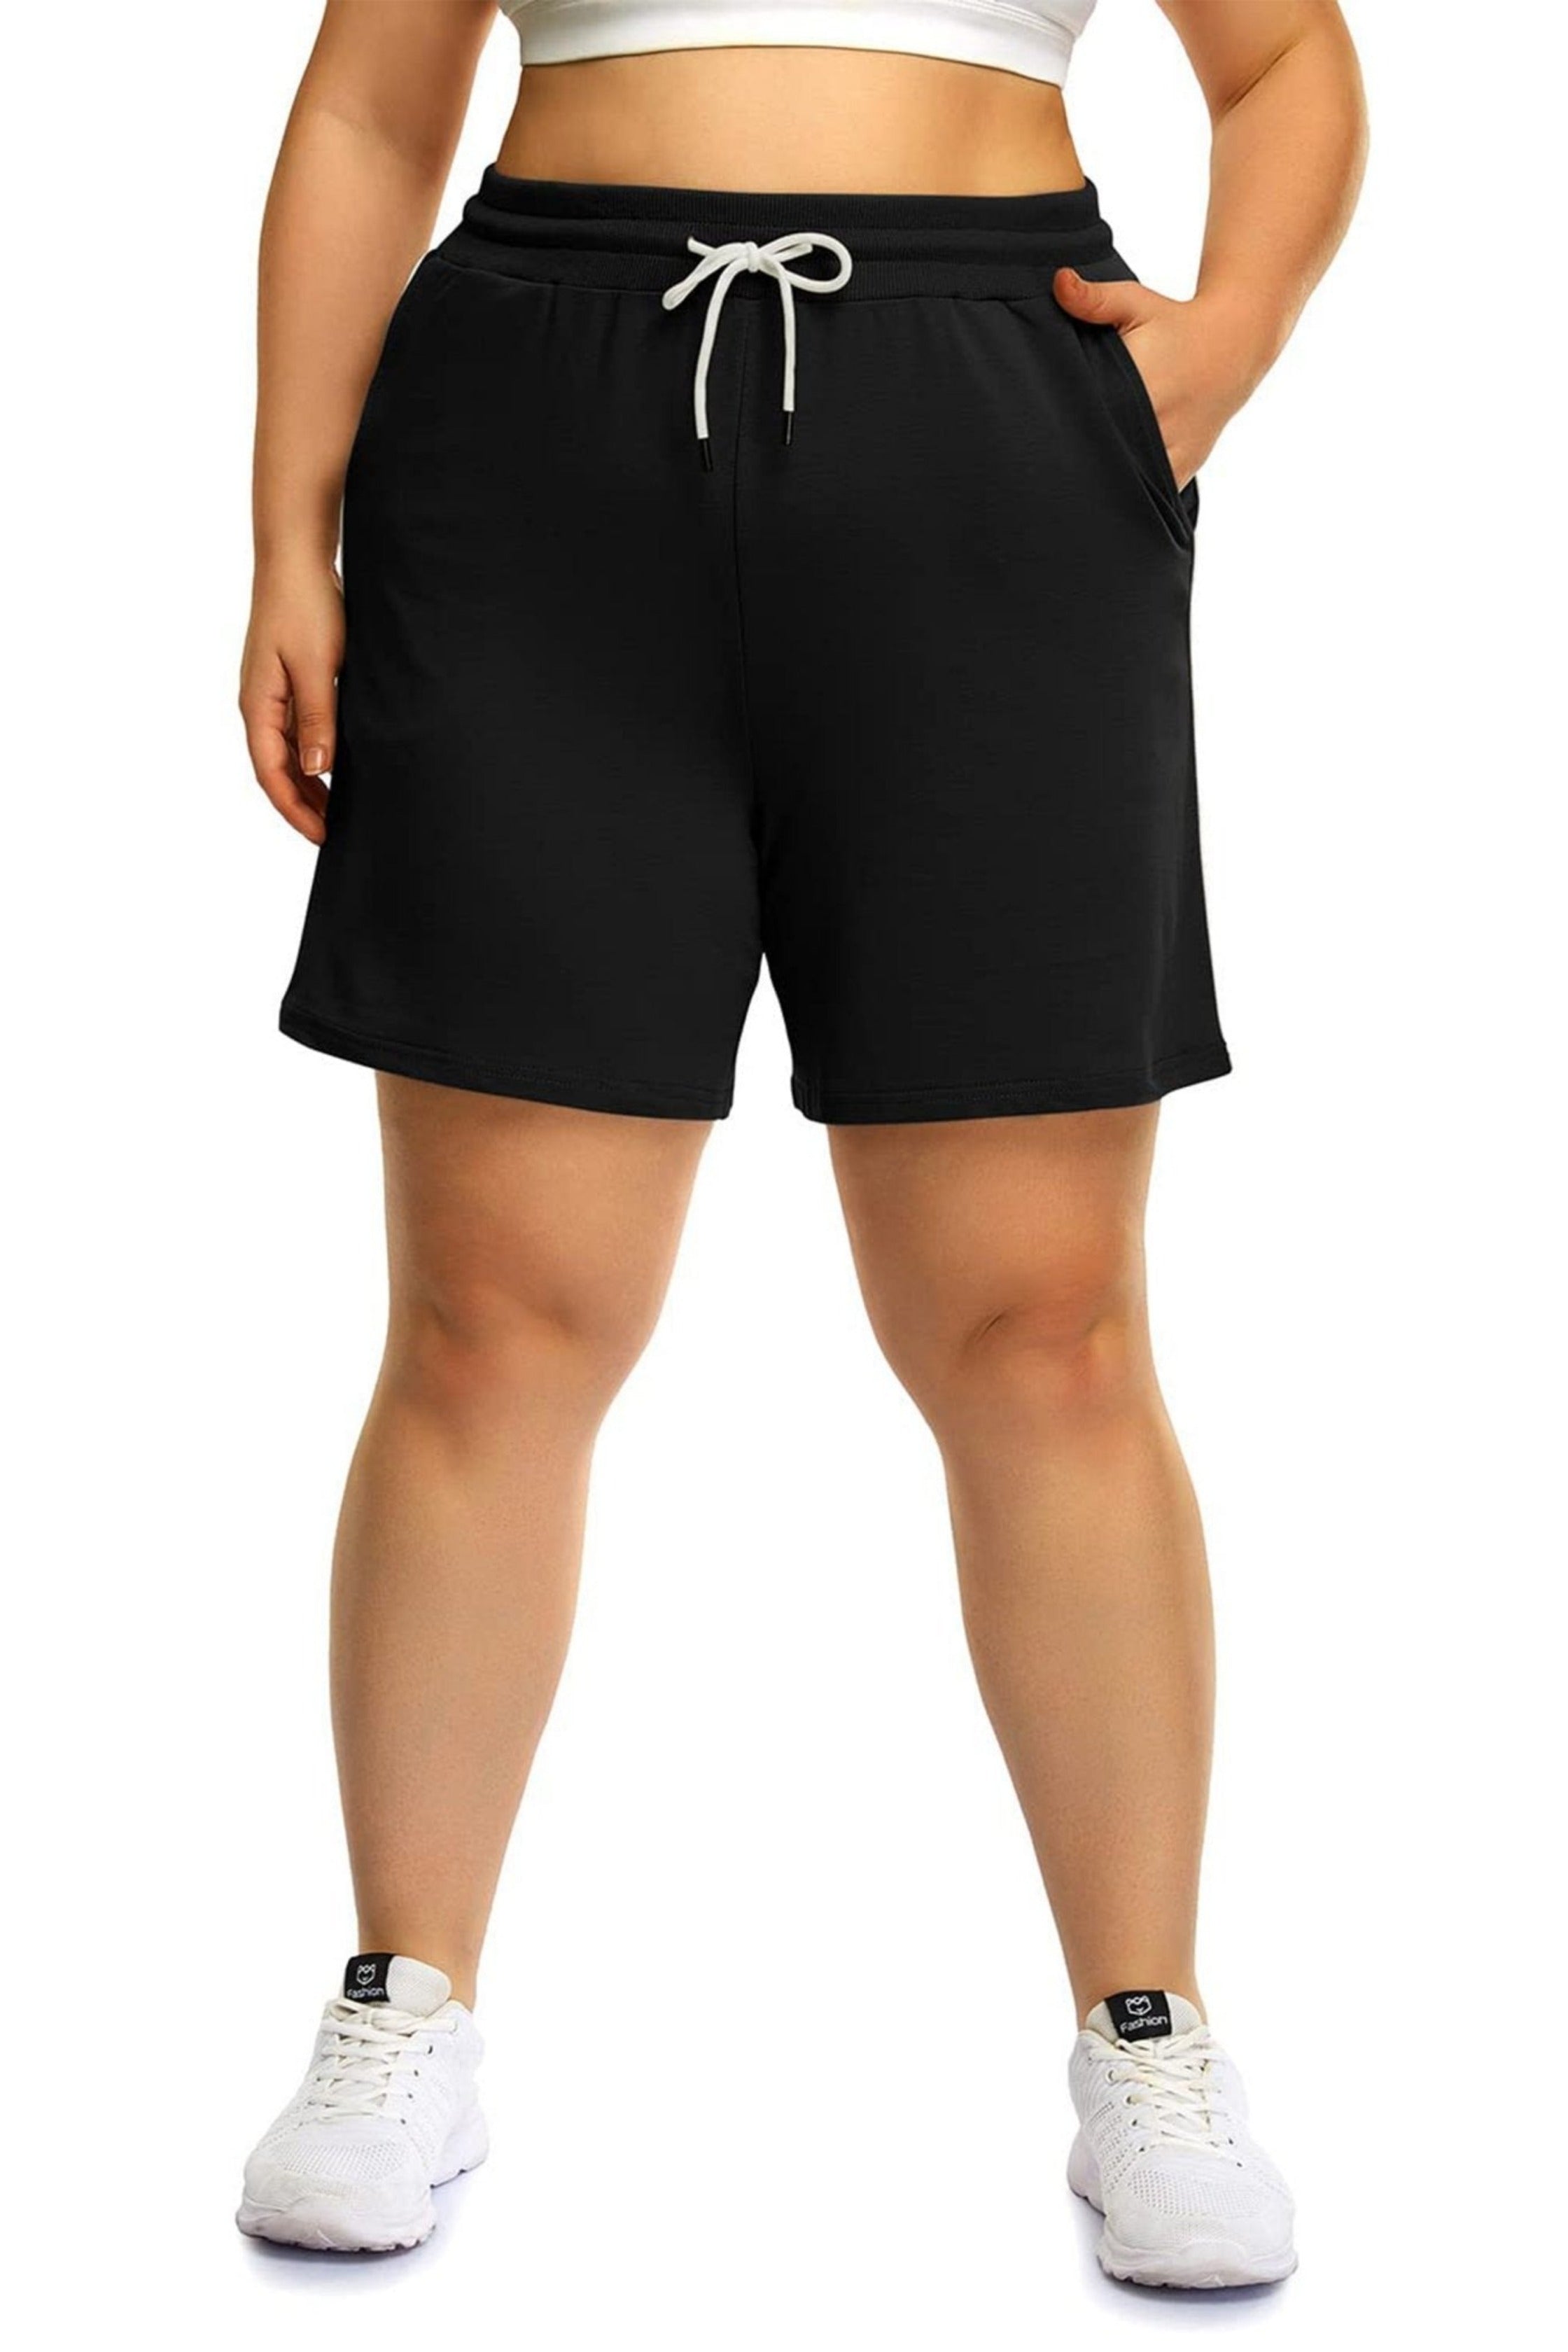 POSESHE Women's Plus Size Yoga Pant, Basic Leggings for Workout, S-5XL